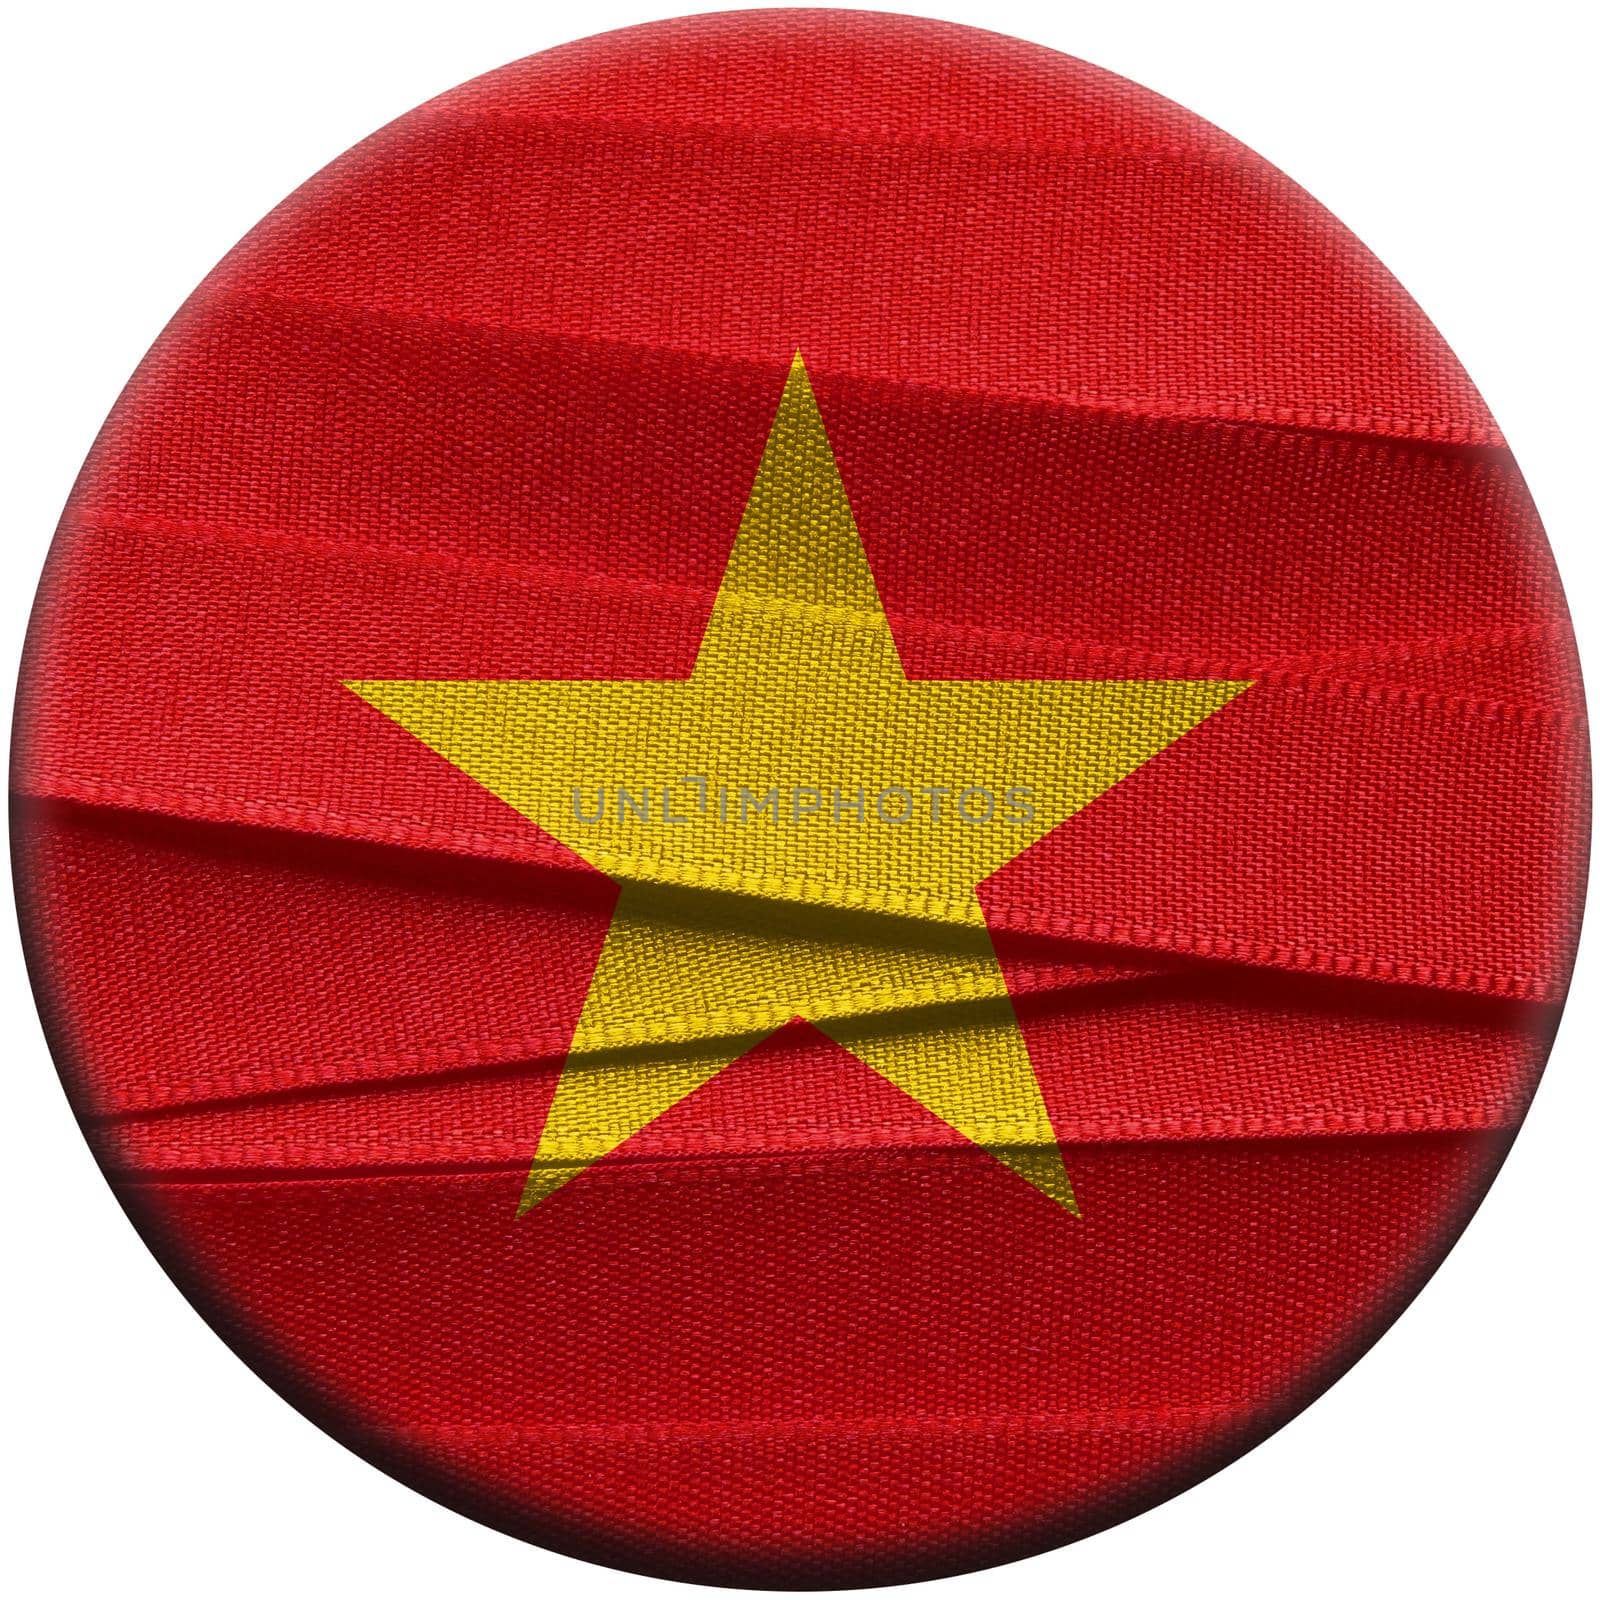 Vietnam flag or banner by aroas